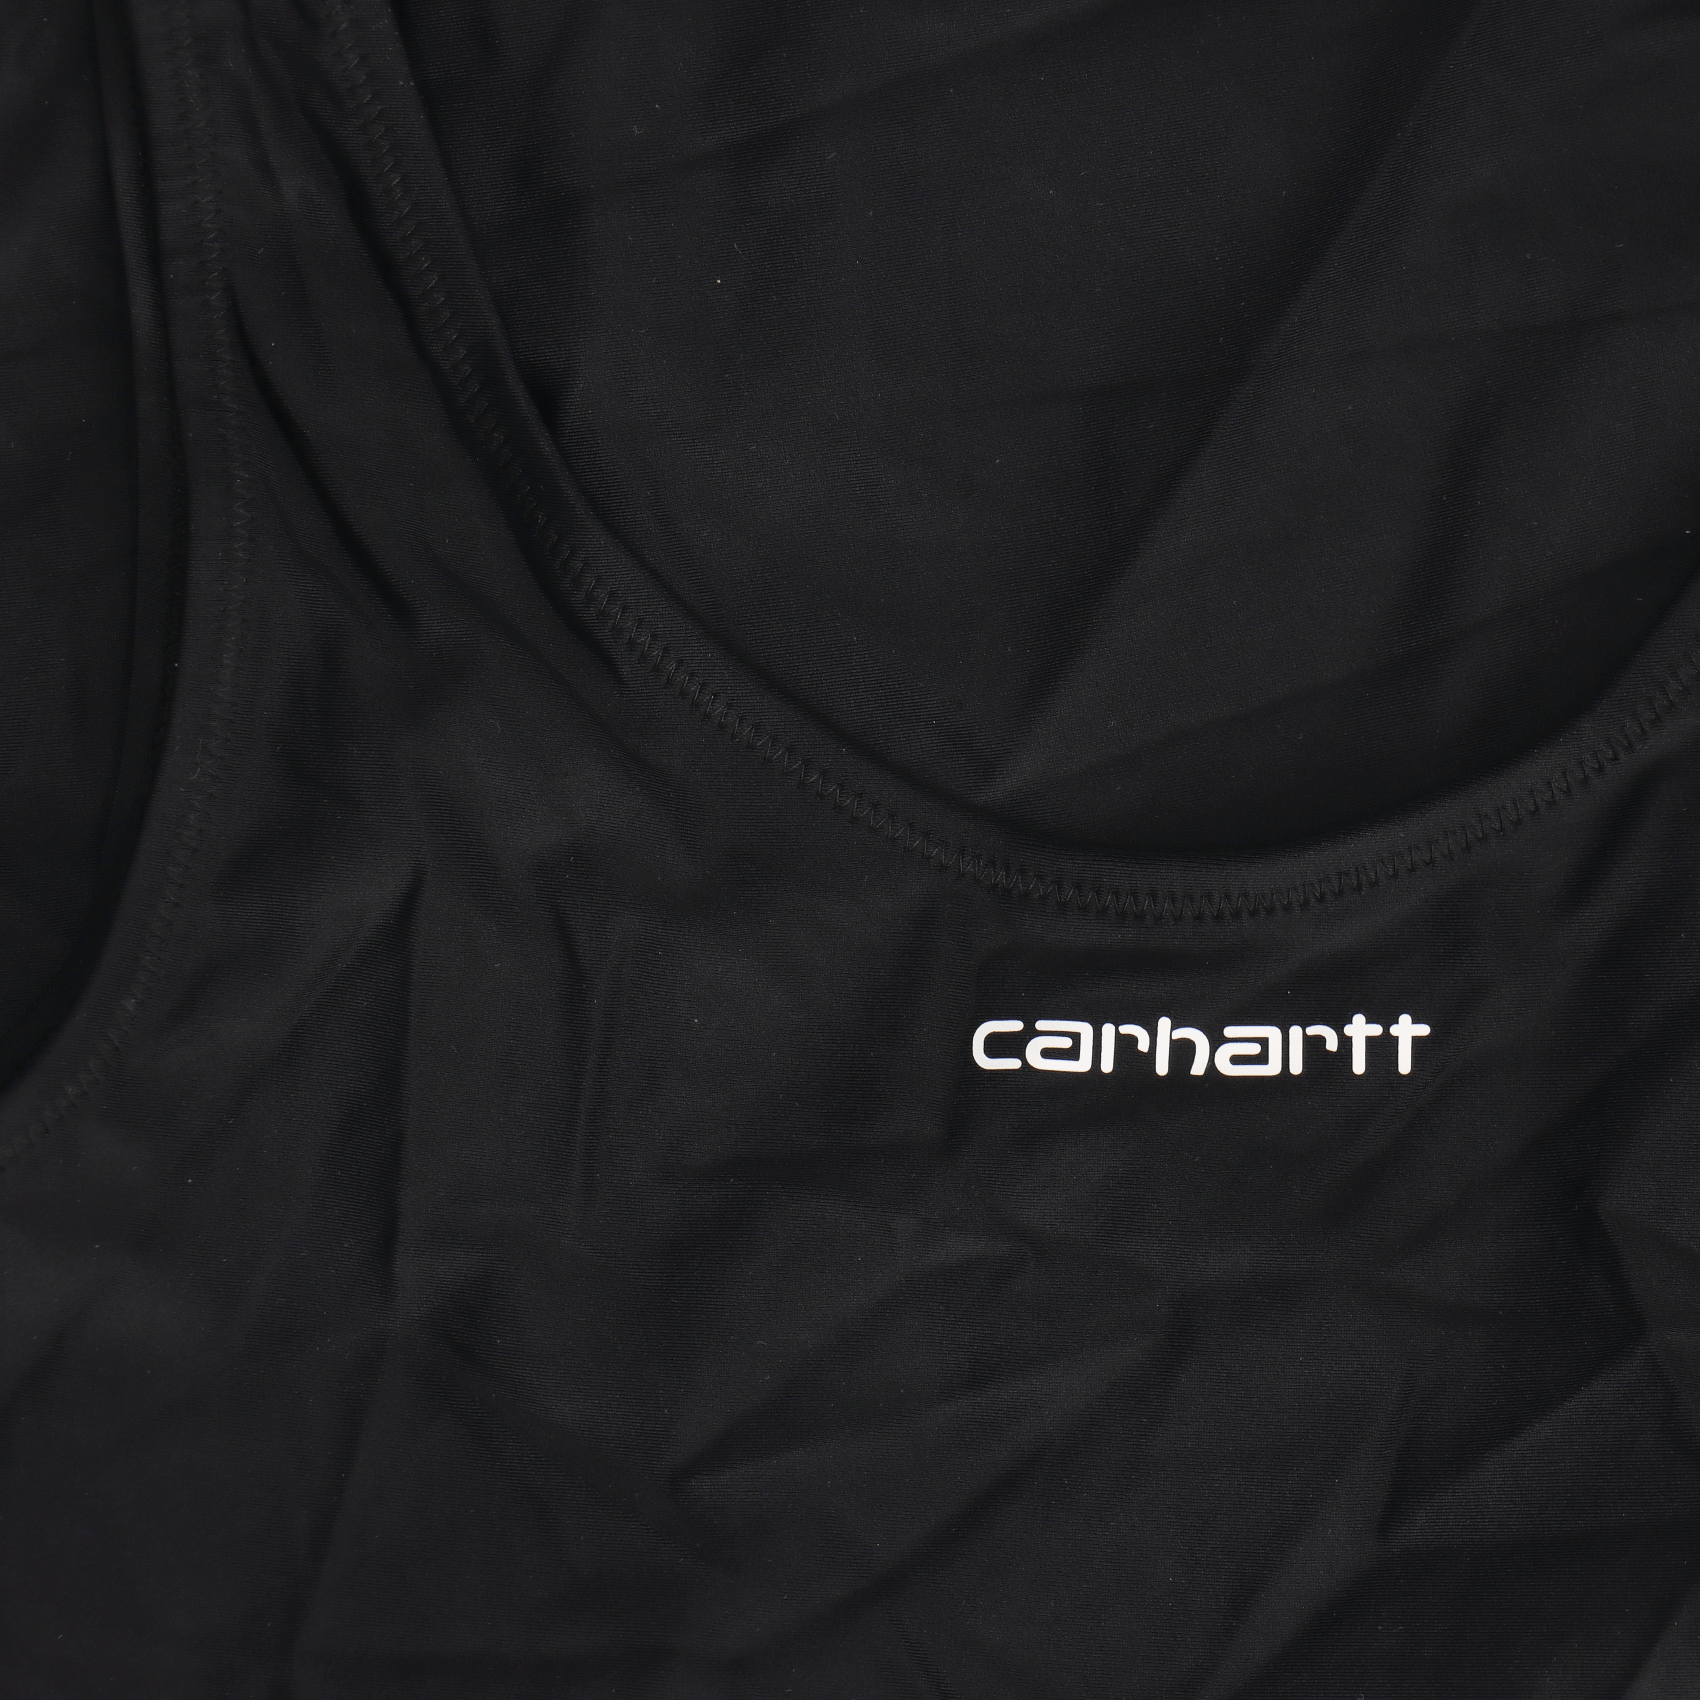 W Carhartt Swimsuit - Black/White.